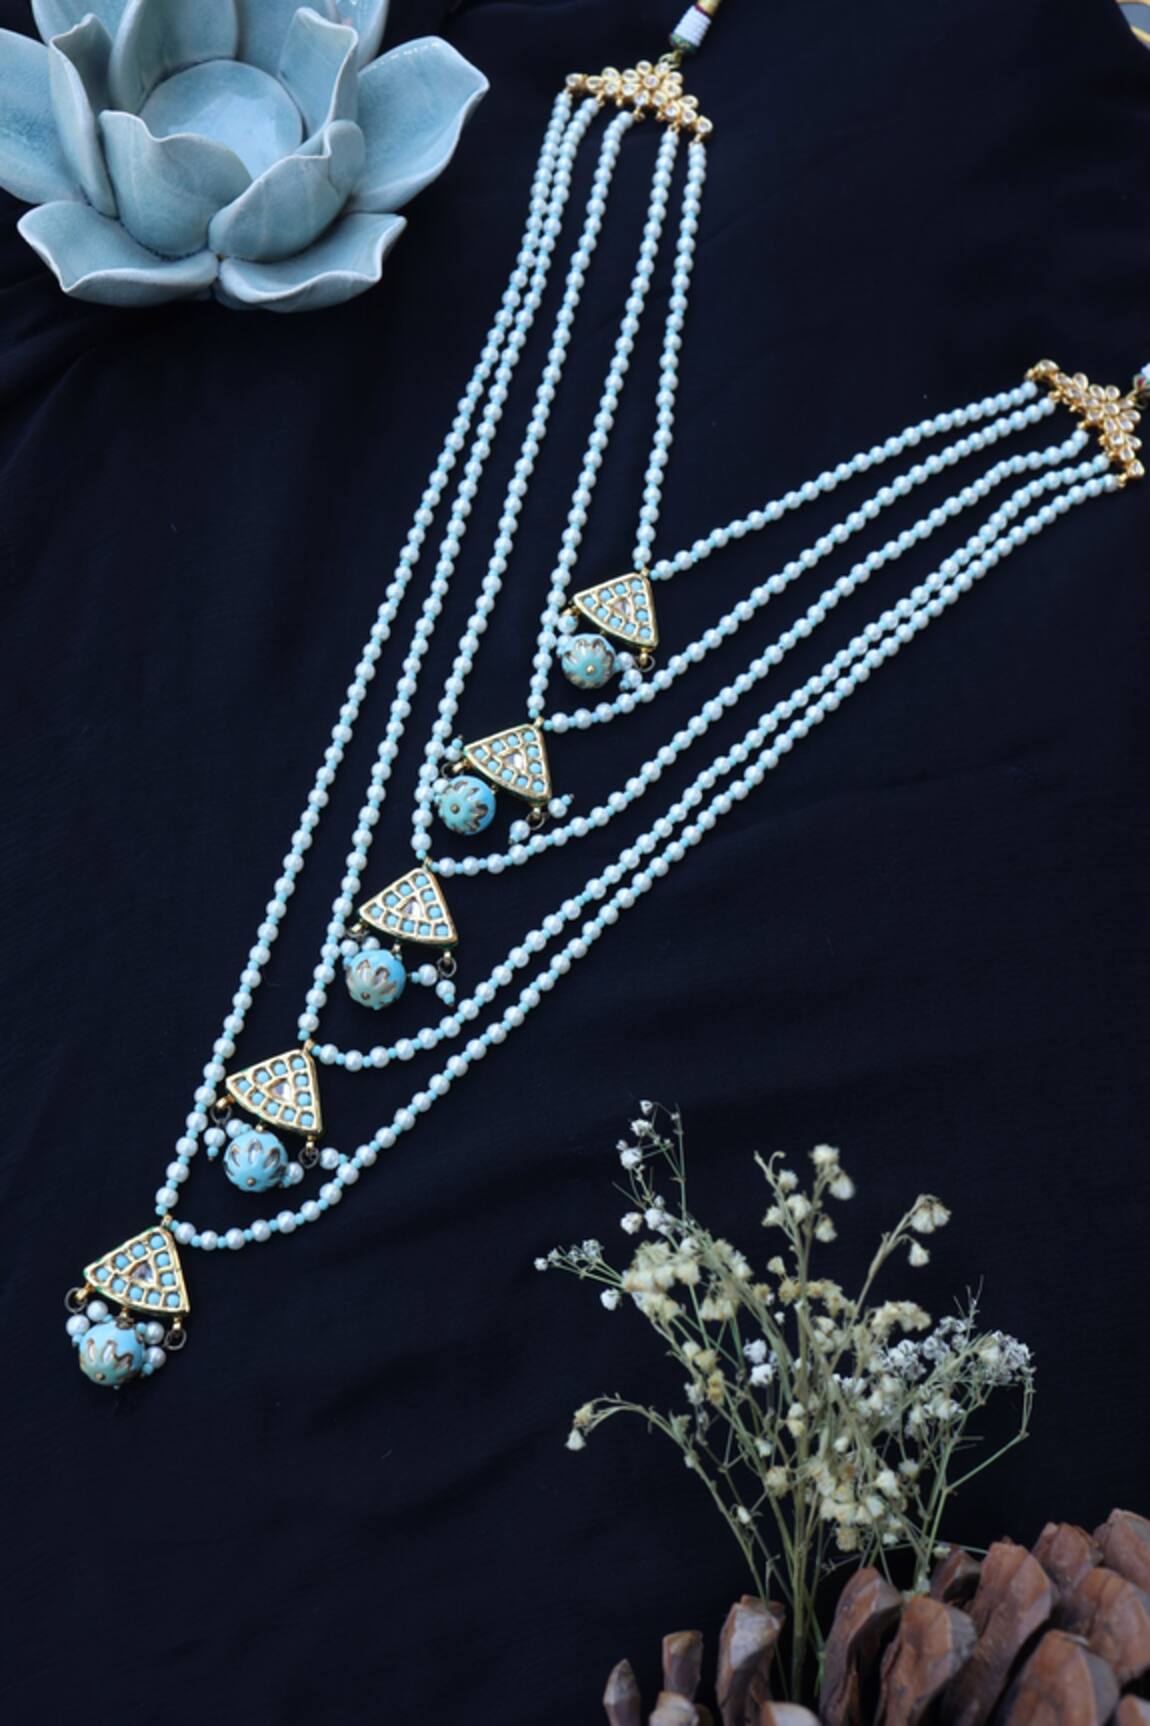 Fashionable FIve Layers Boho Jewelry Natural Stone Turquoise